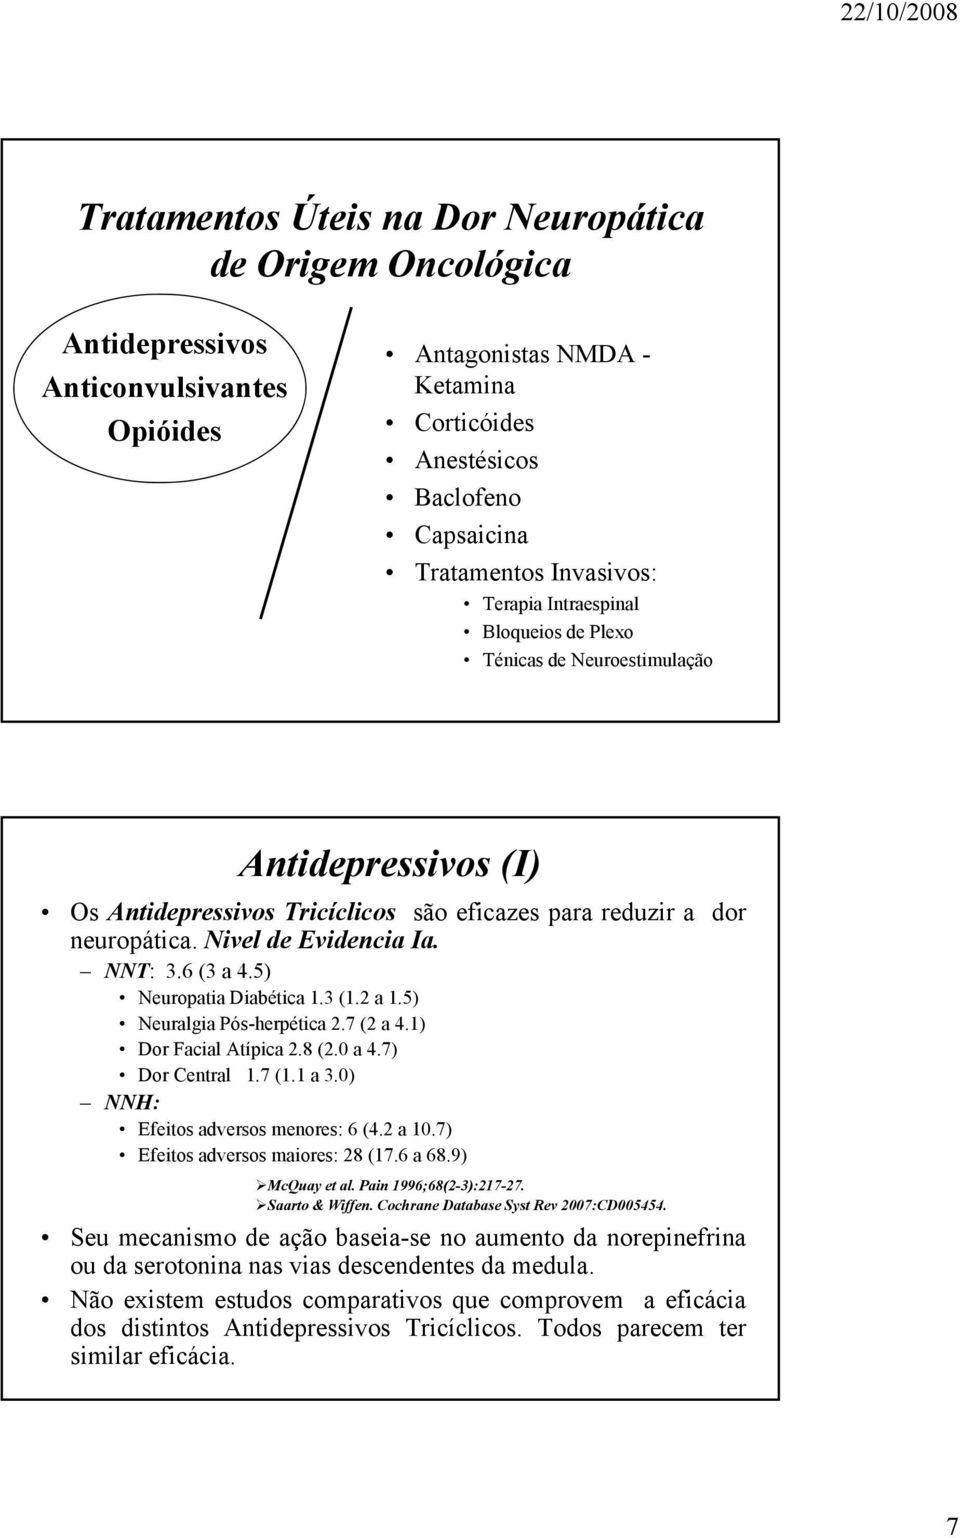 NNT: 3.6 (3 a 4.5) Neuropatia Diabética 1.3 (1.2 a 1.5) Neuralgia Pós-herpética 2.7 (2 a 4.1) Dor Facial Atípica 2.8 (2.0 a 4.7) Dor Central 1.7 (1.1 a 3.0) NNH: Efeitos adversos menores: 6 (4.2 a 10.